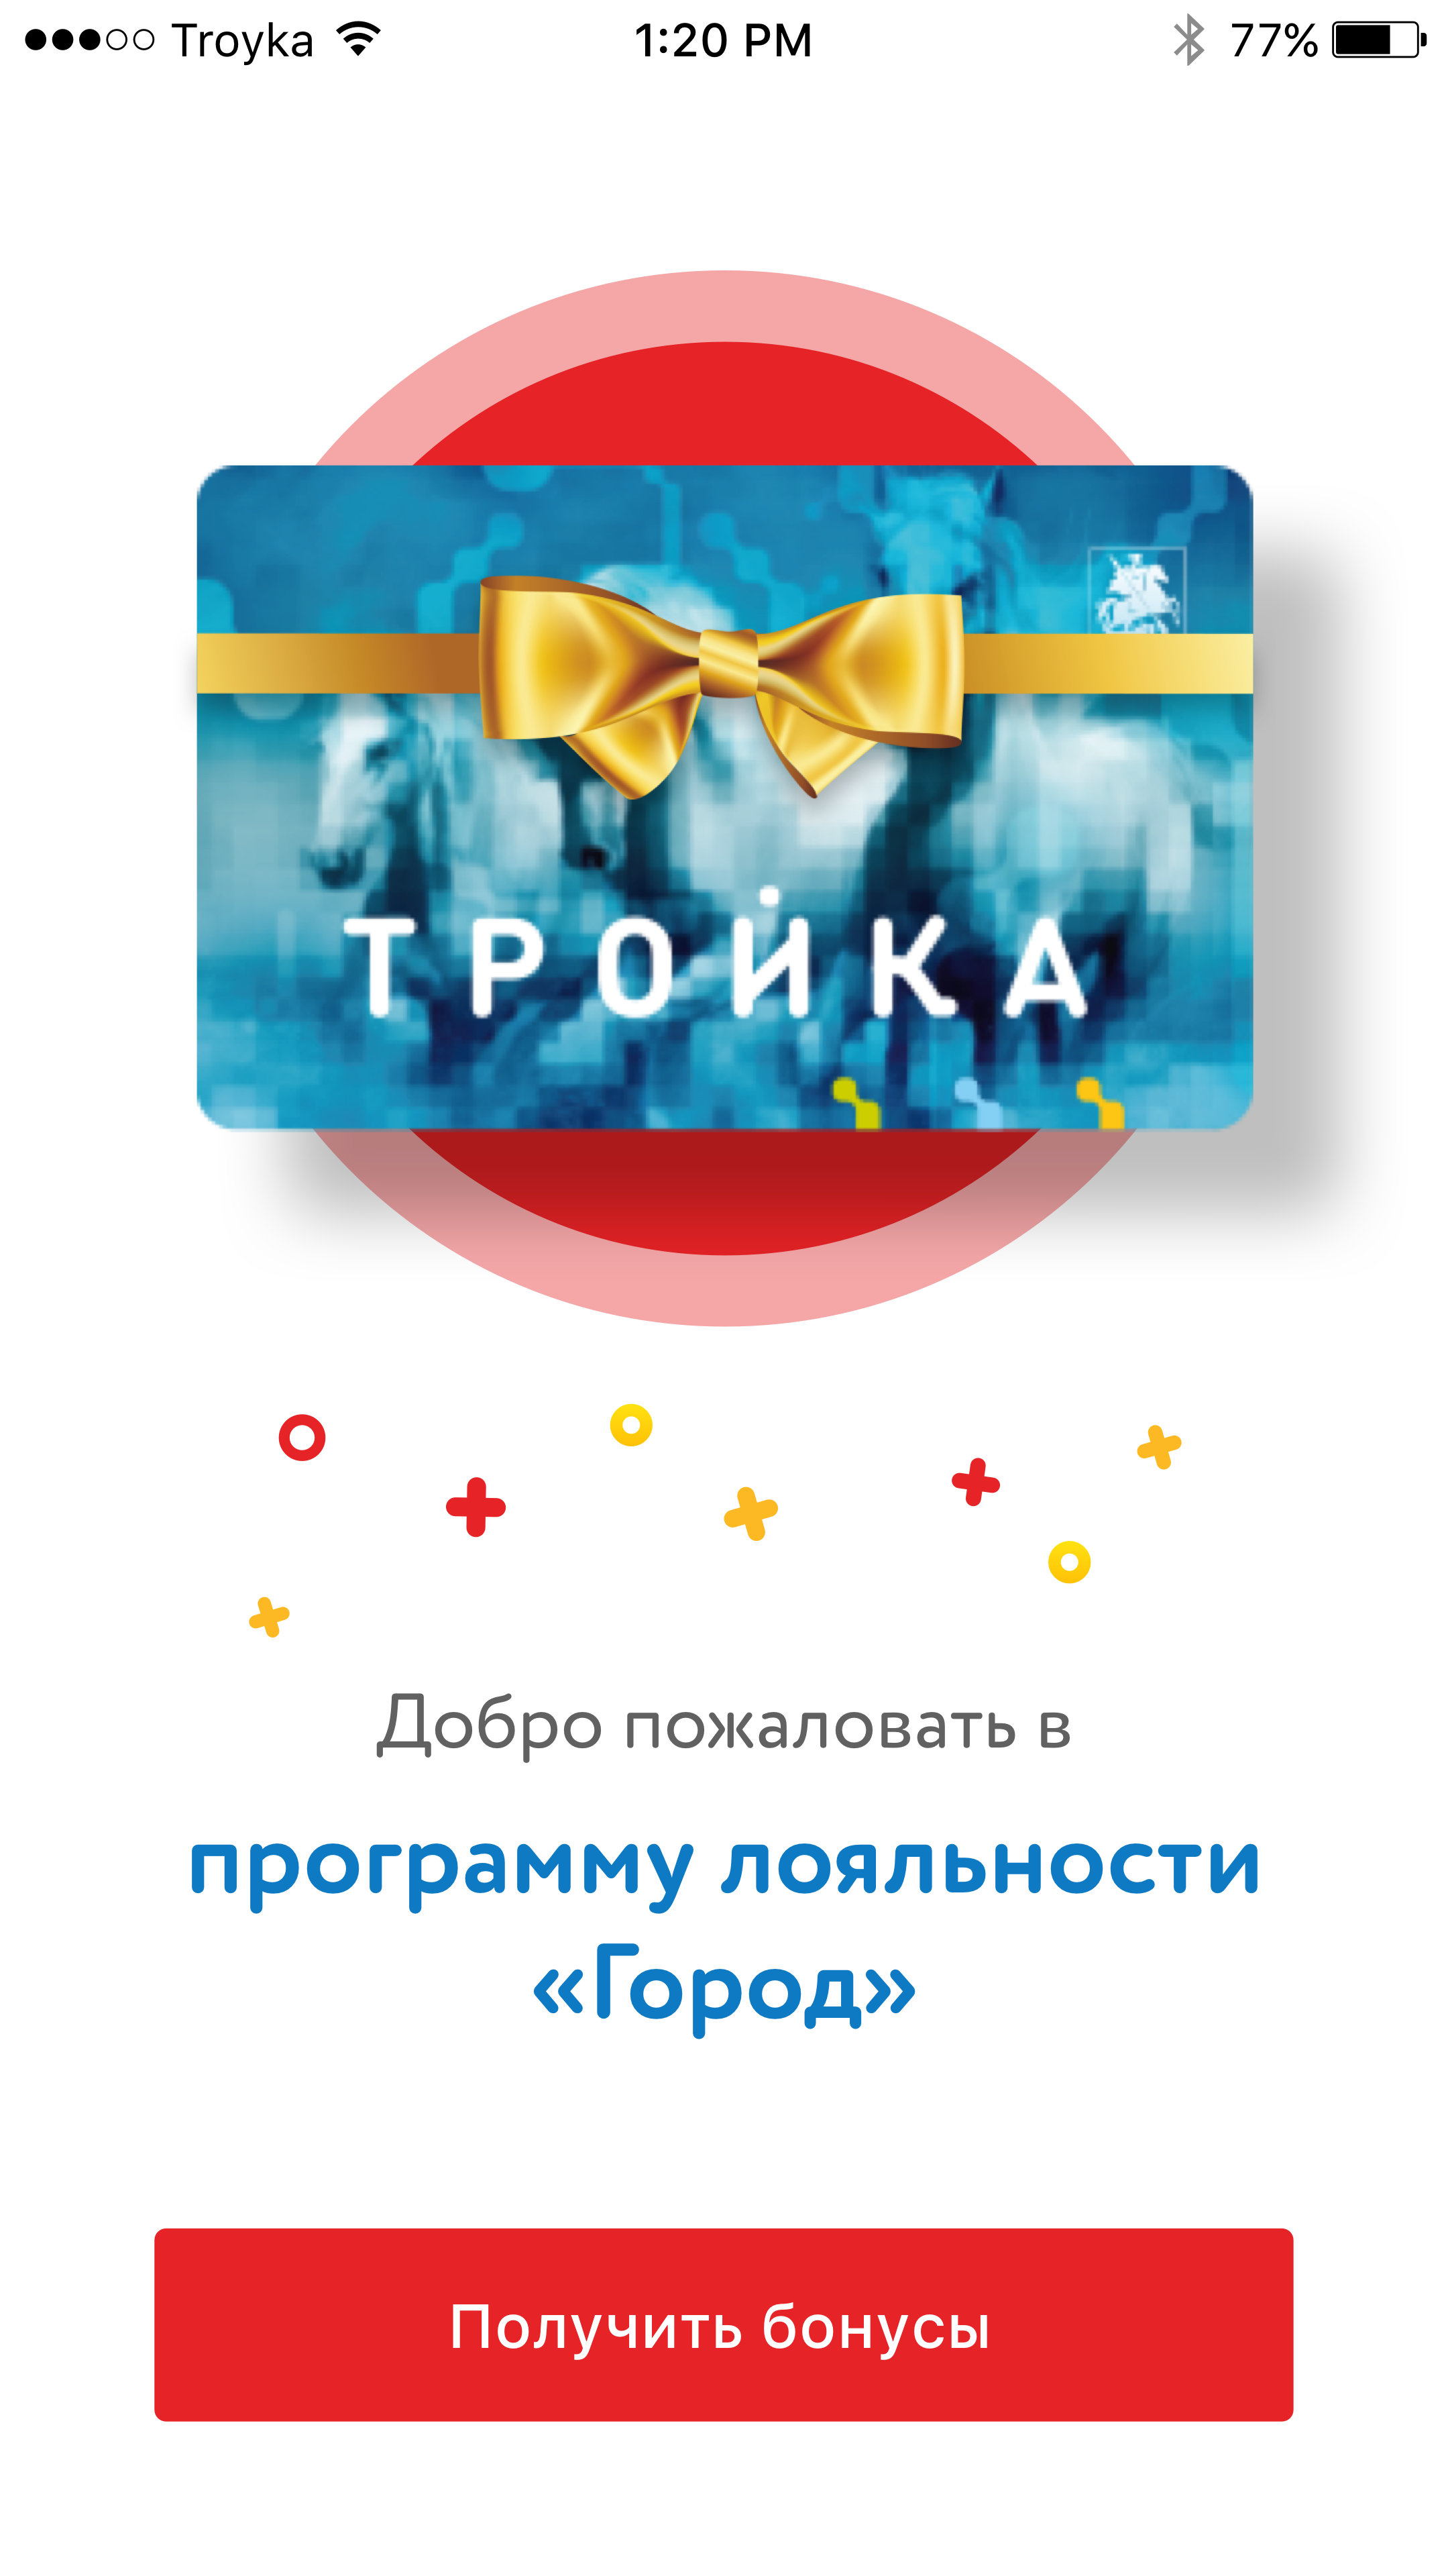 Android application Программа лояльности "Город" screenshort